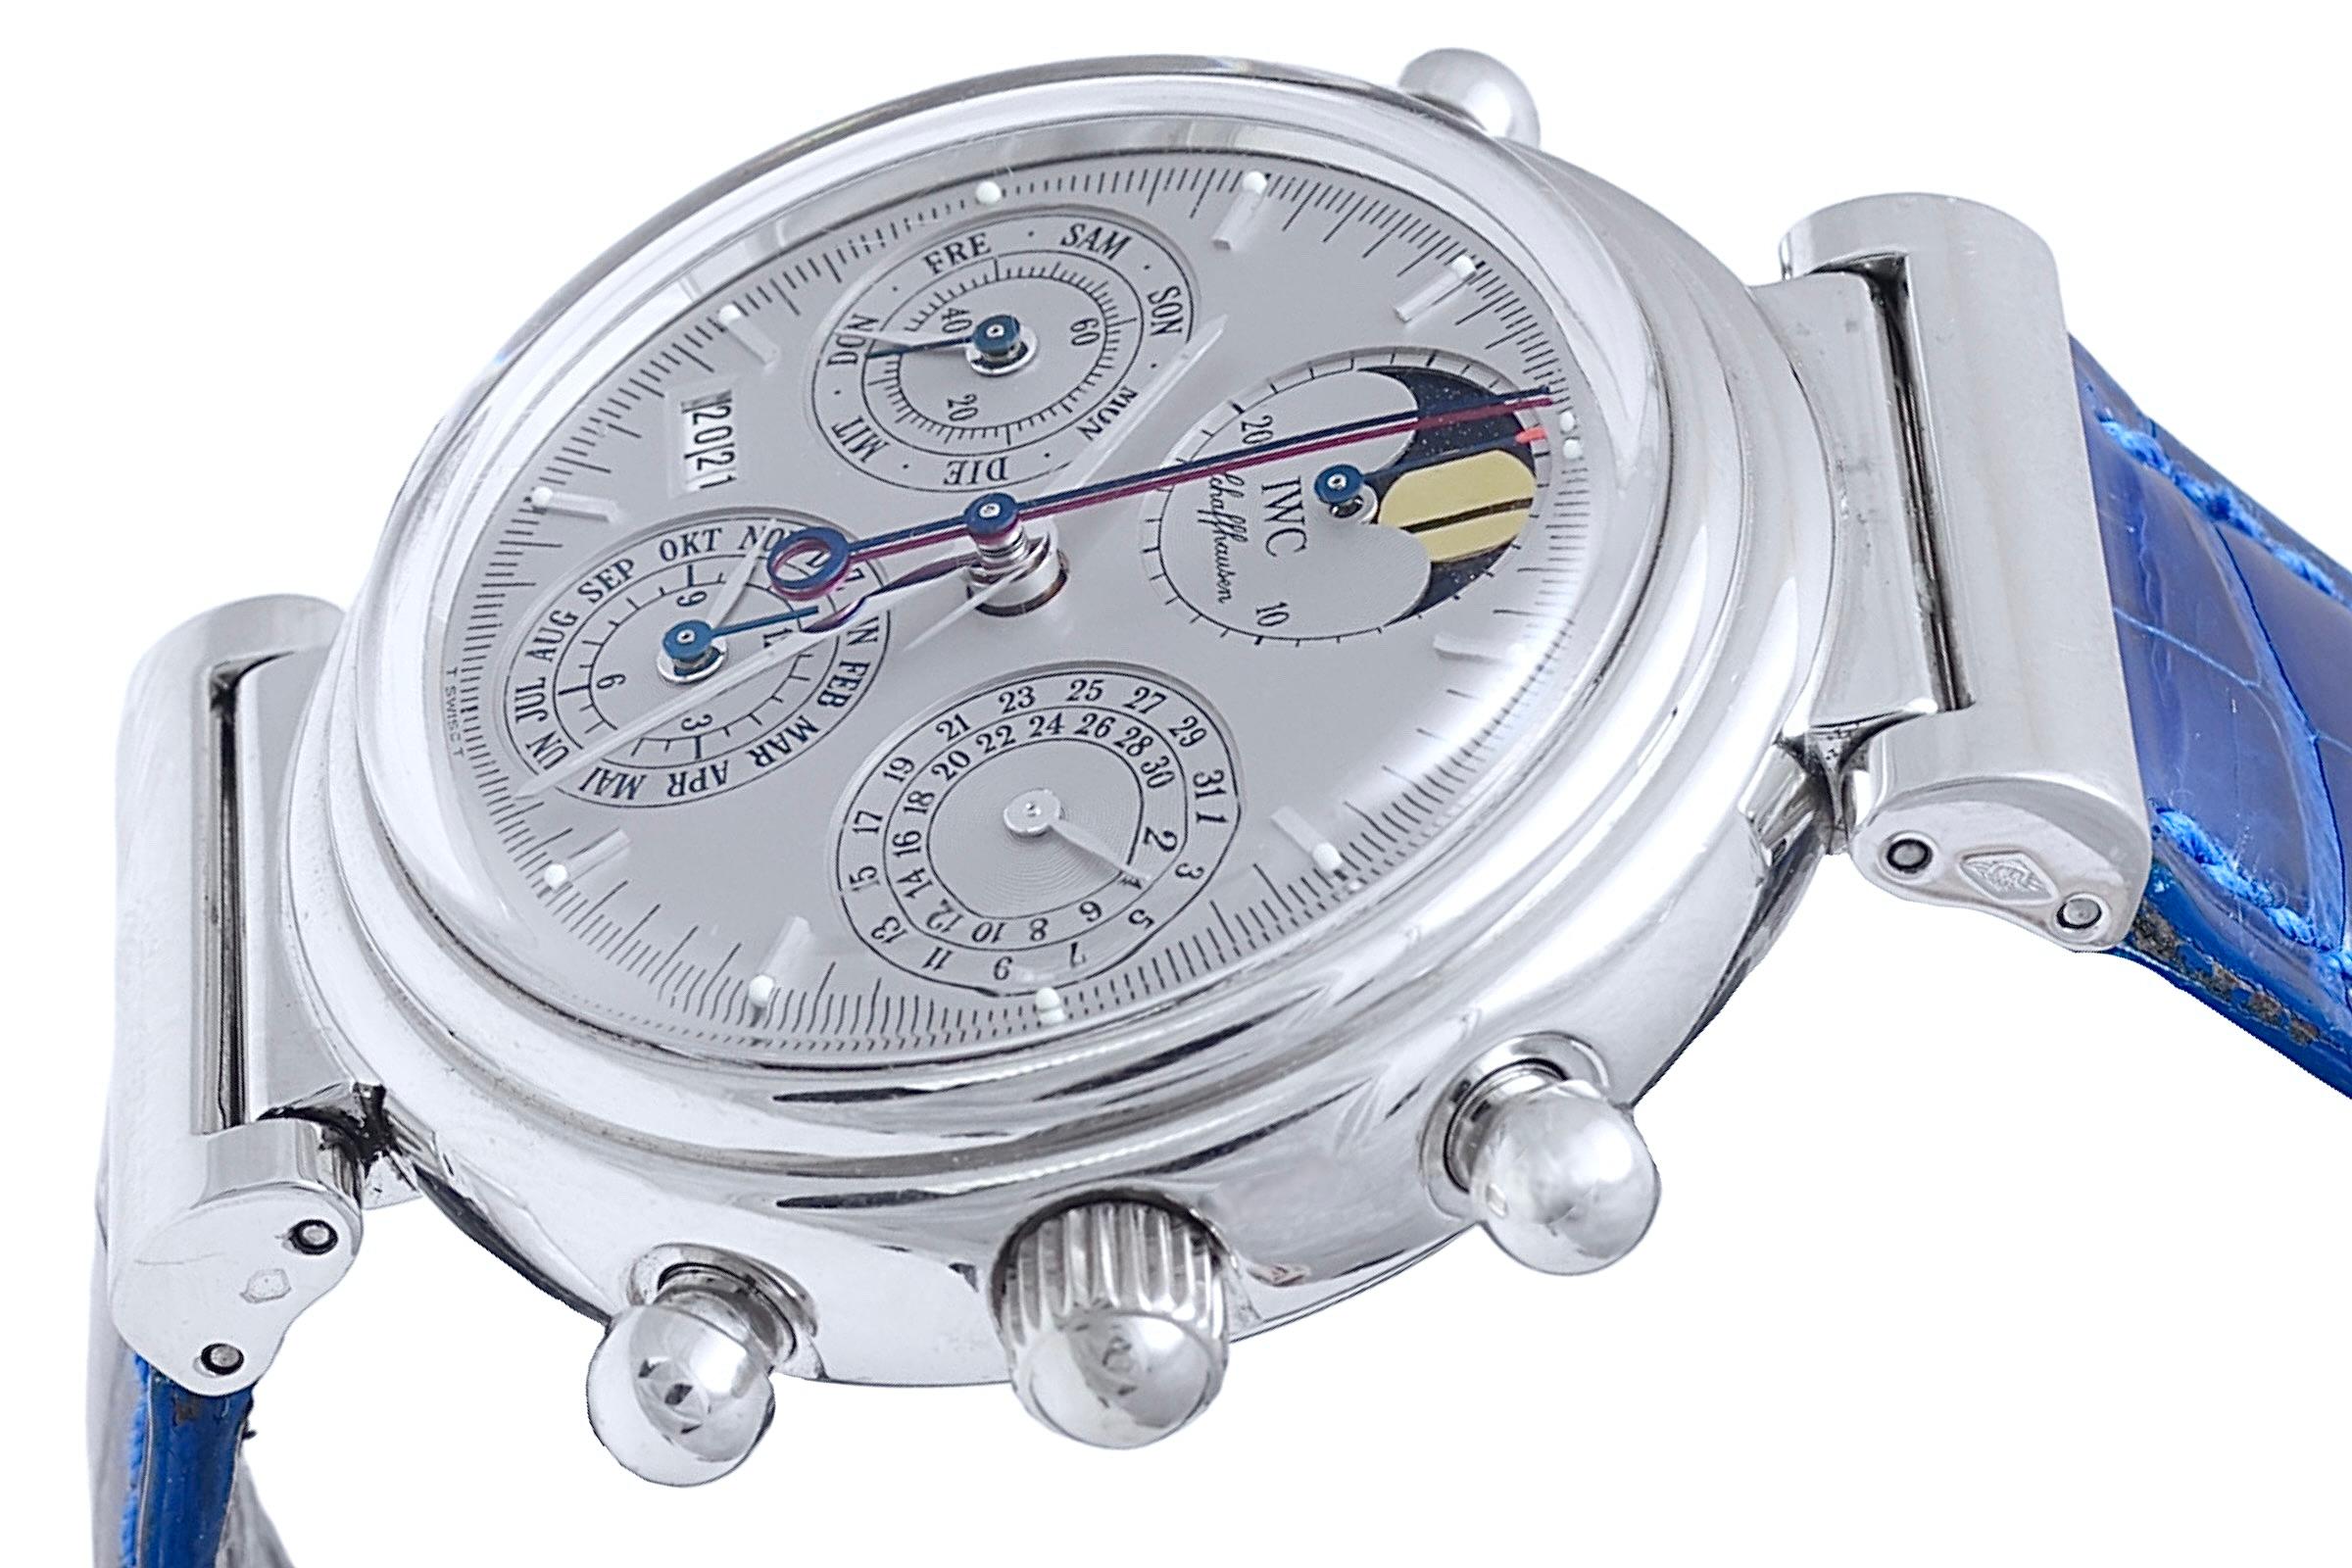 Women's or Men's Platinum IWC Perpetual Calendar Split Second Chronograph Limited Wrist Watch3751 For Sale